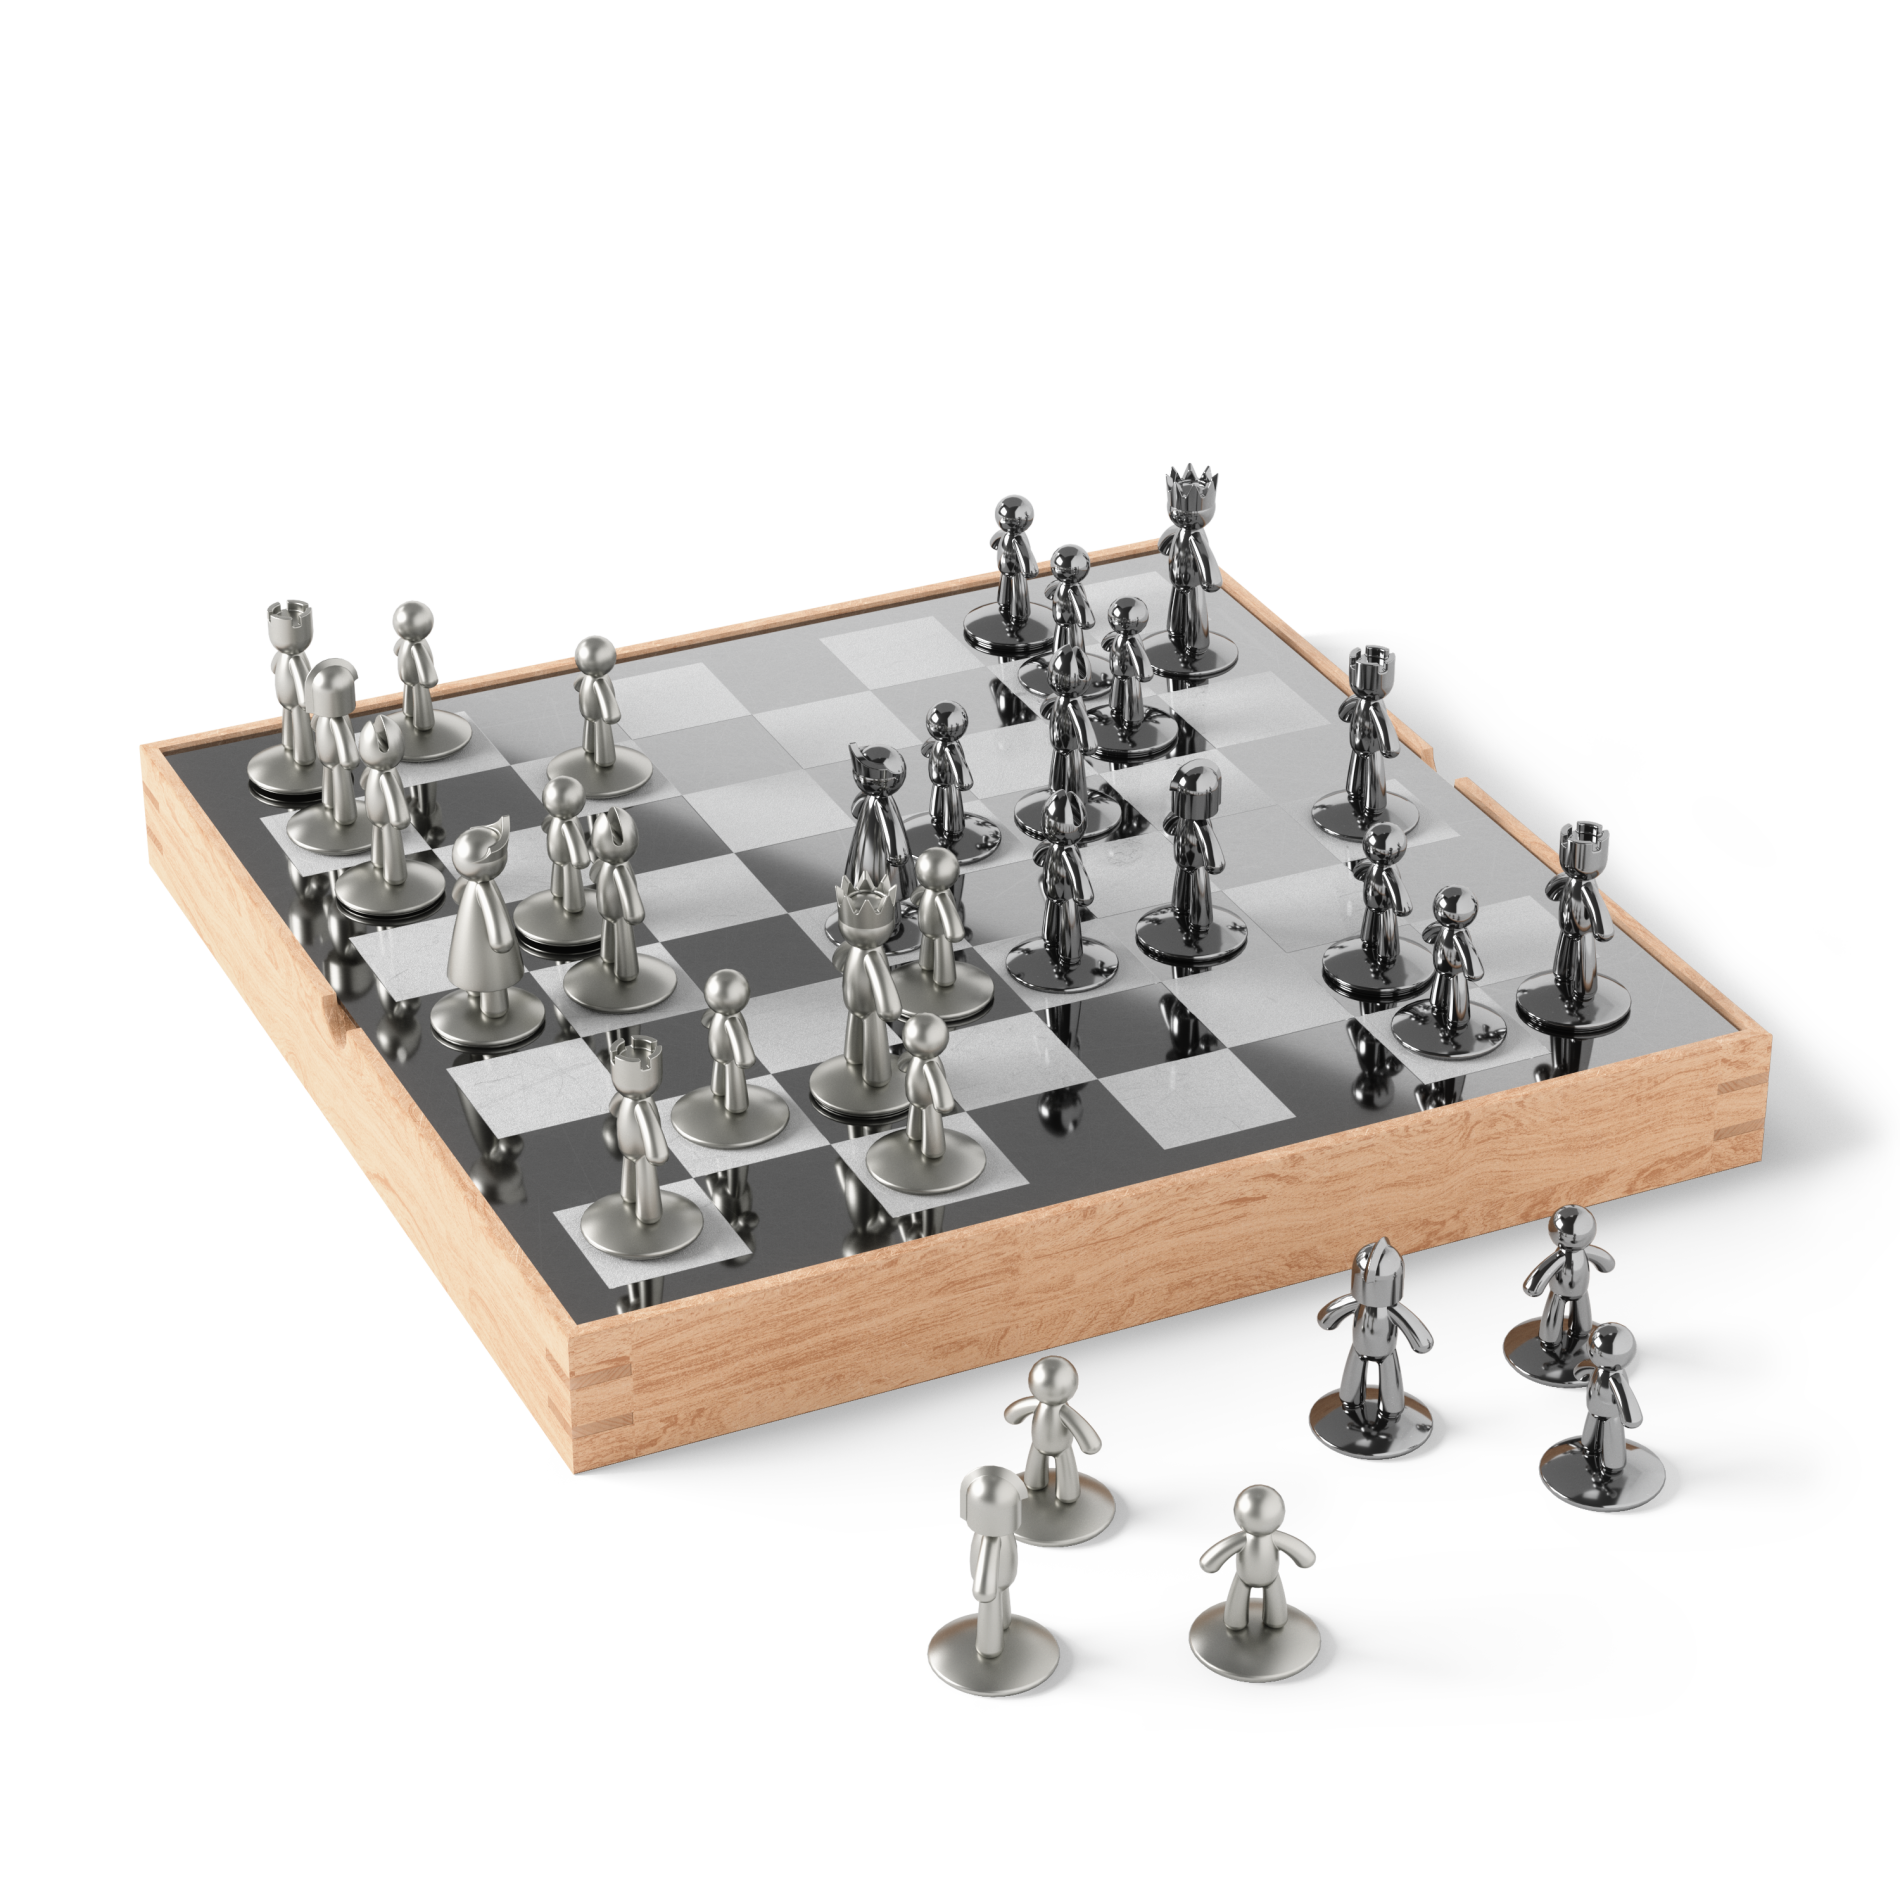 Blitz chess set (AP722667)